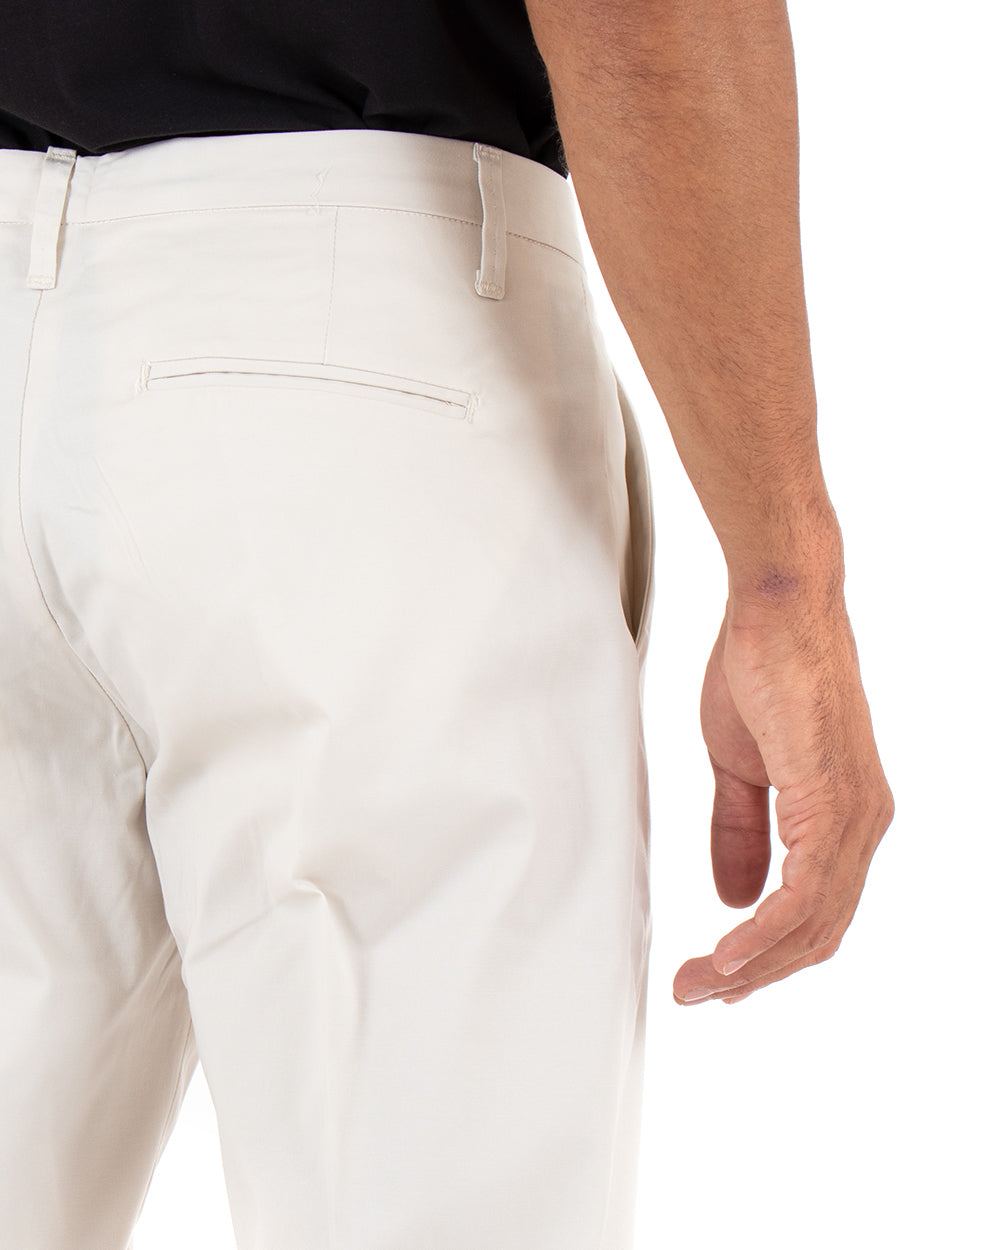 Pantaloni Uomo Tasca America Con Pinces Classico Cotone Tinta Unita Panna GIOSAL-P3908A